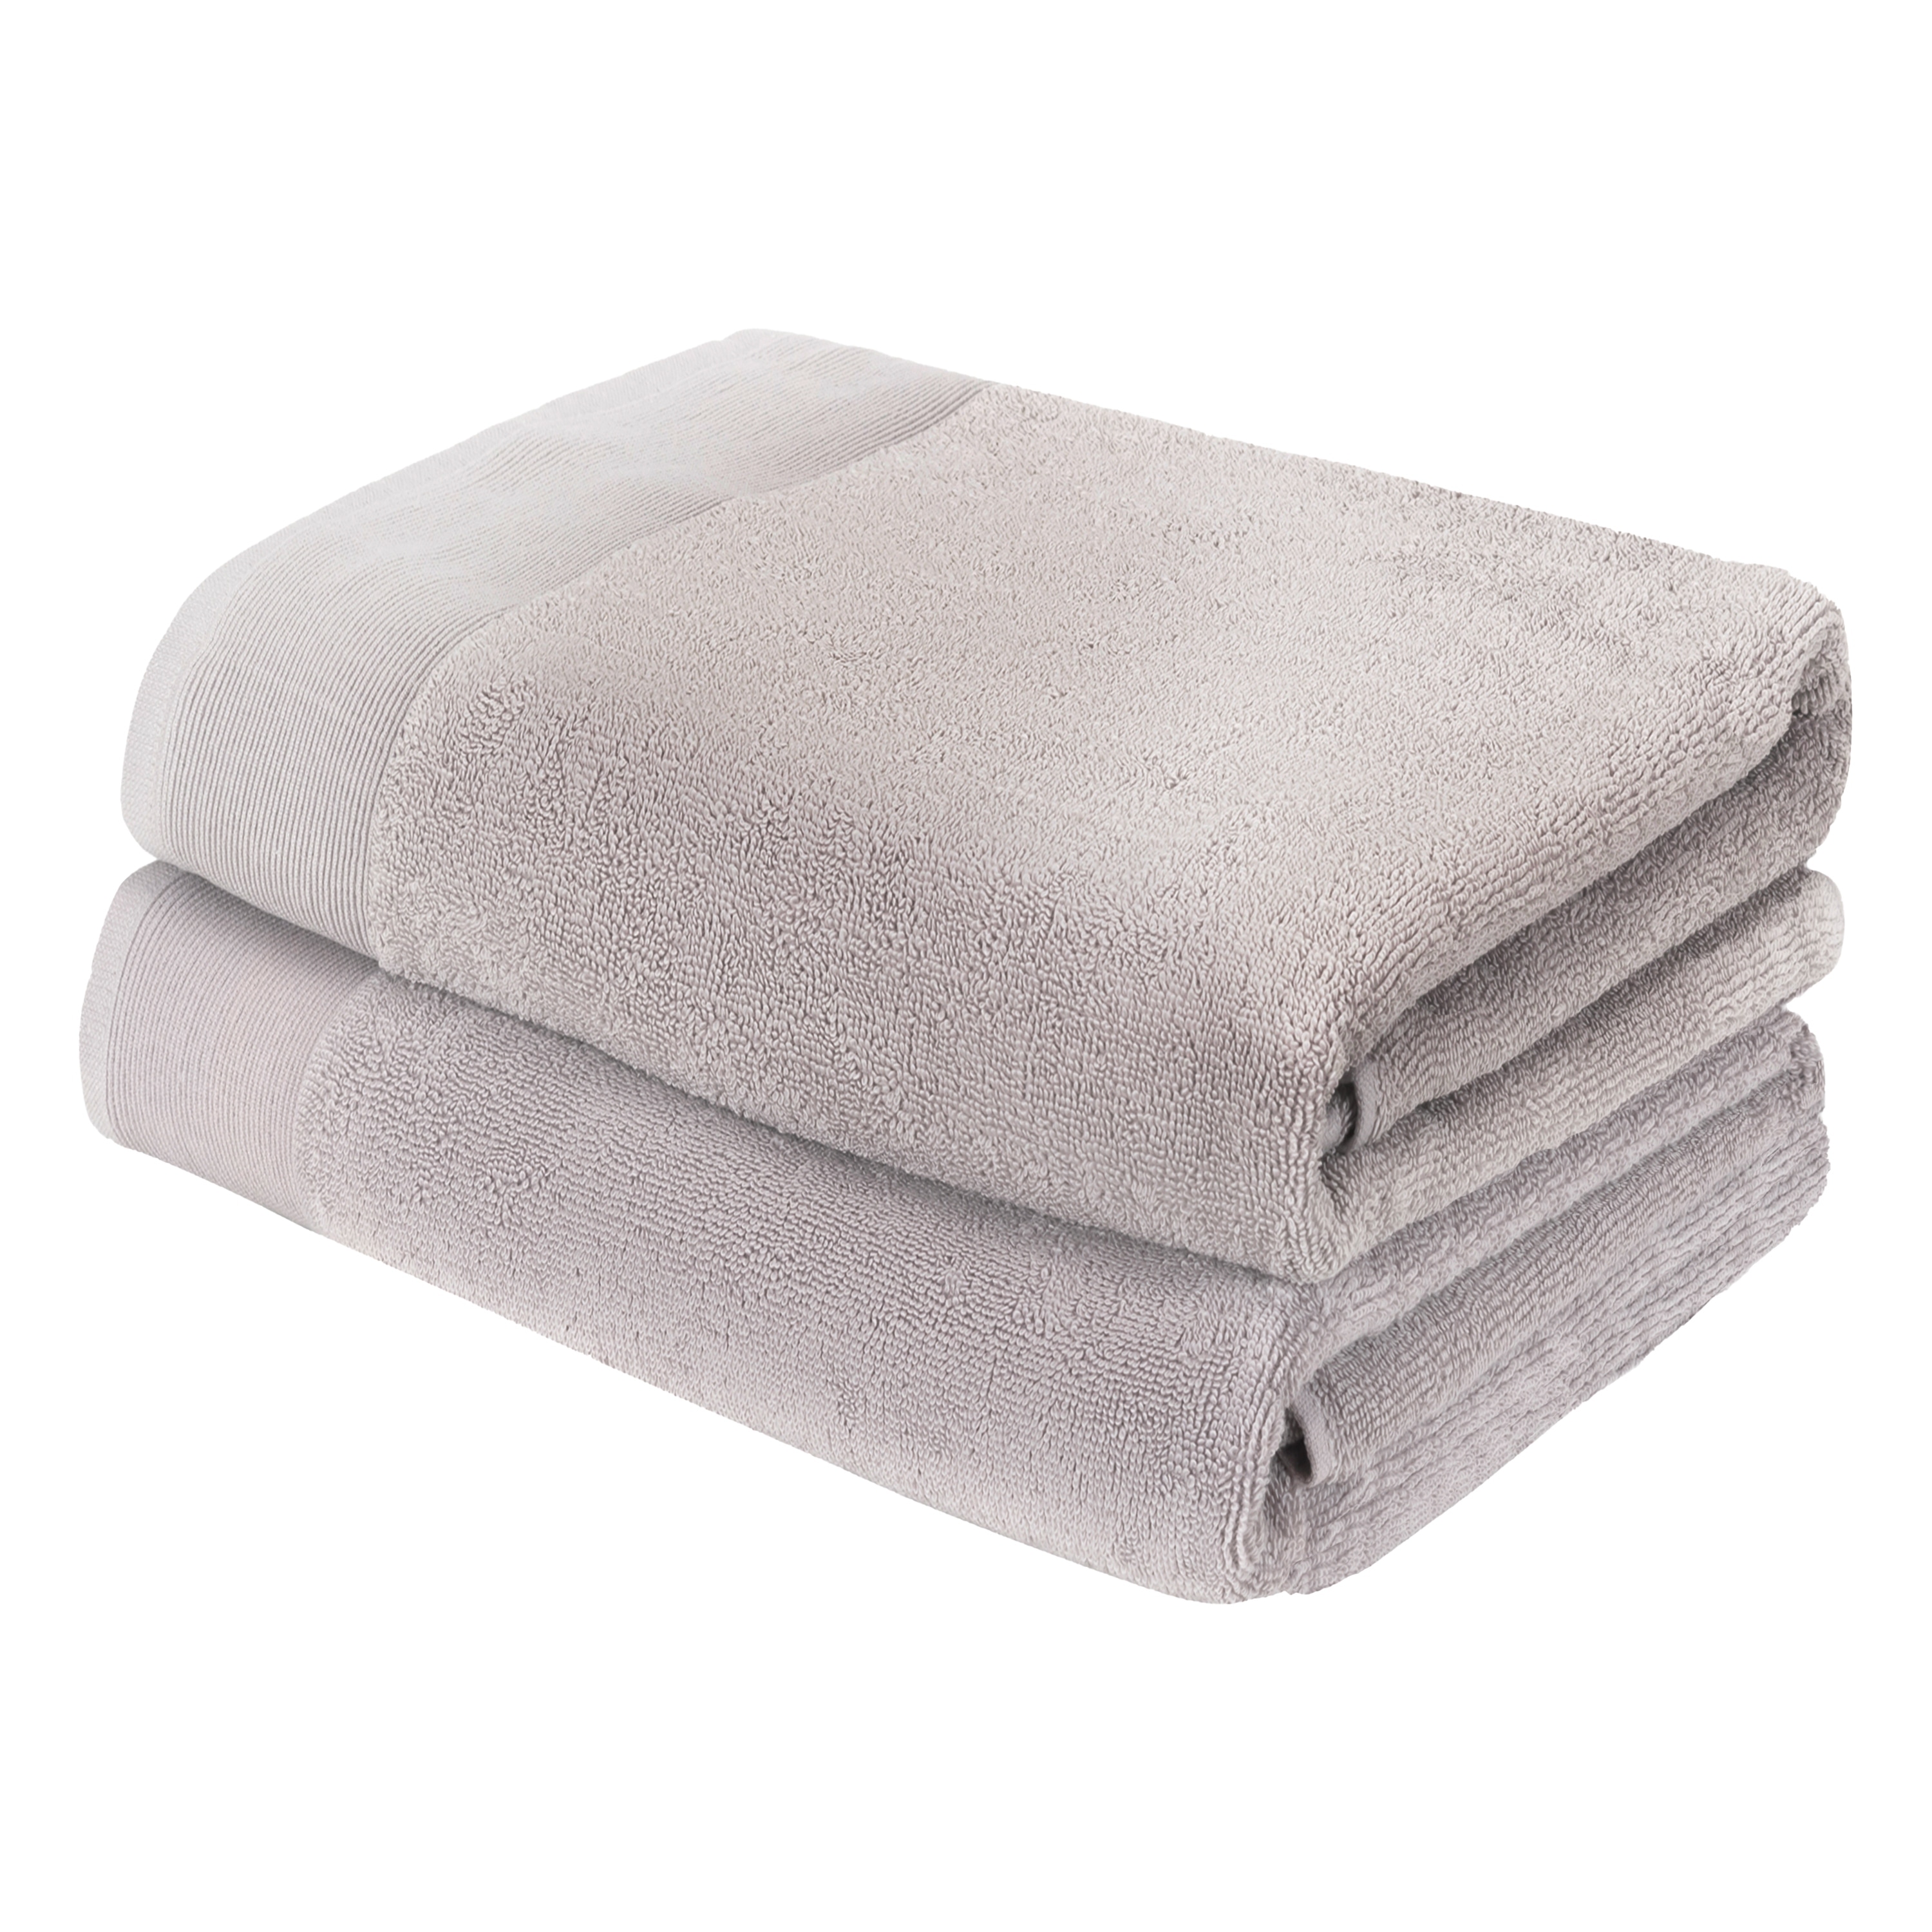 Cotton Craft Popcorn Towel Set - 10 Piece Luxury Towel Set - 100% Cotton Soft Absorbent 600 GSM Bathroom Towels - 2 Large Bath Towel 4 Hand Towel 4